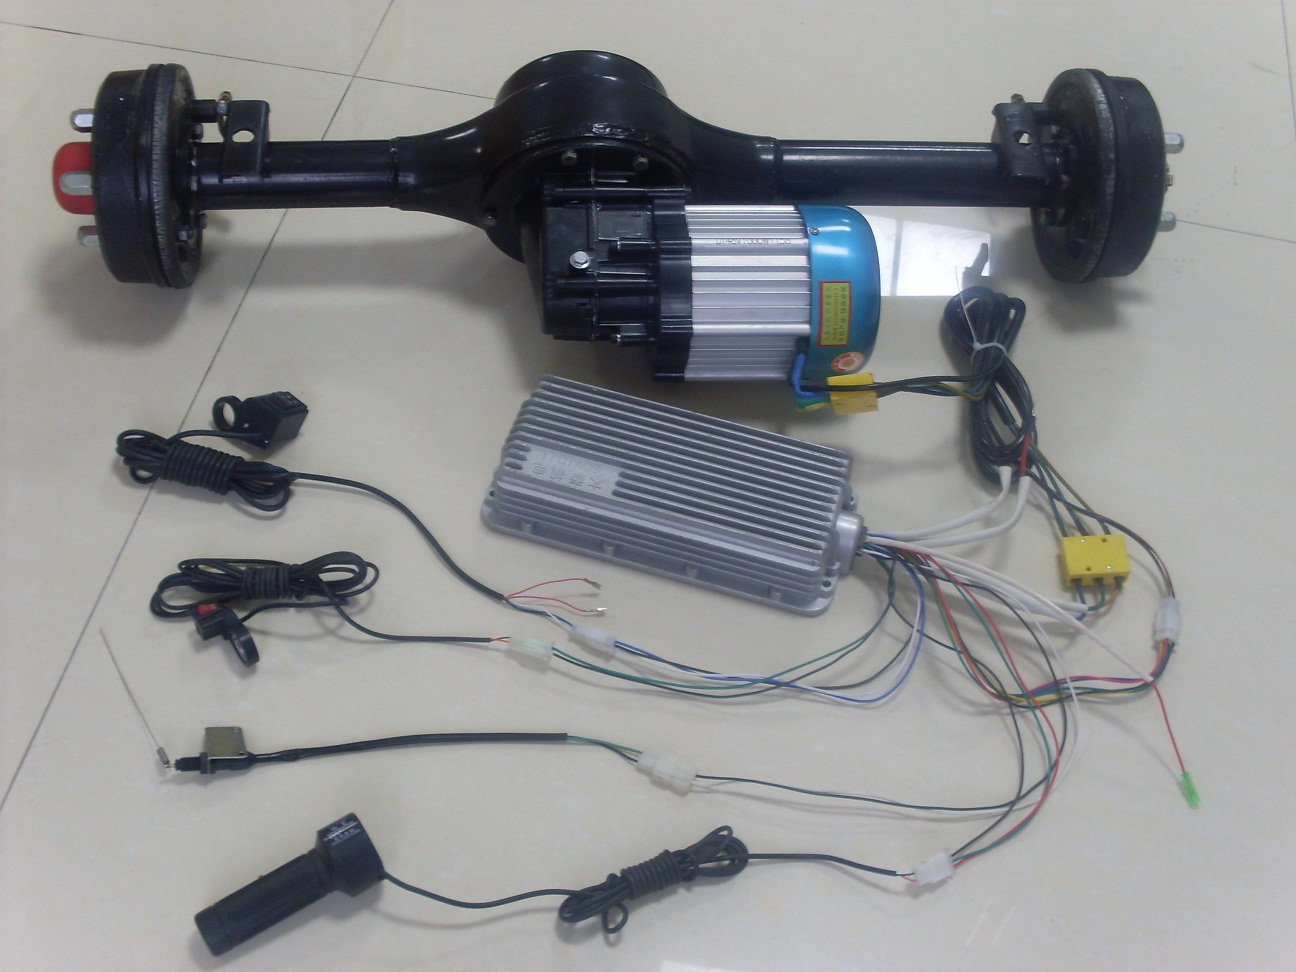 48v 1000w bldc motor kit